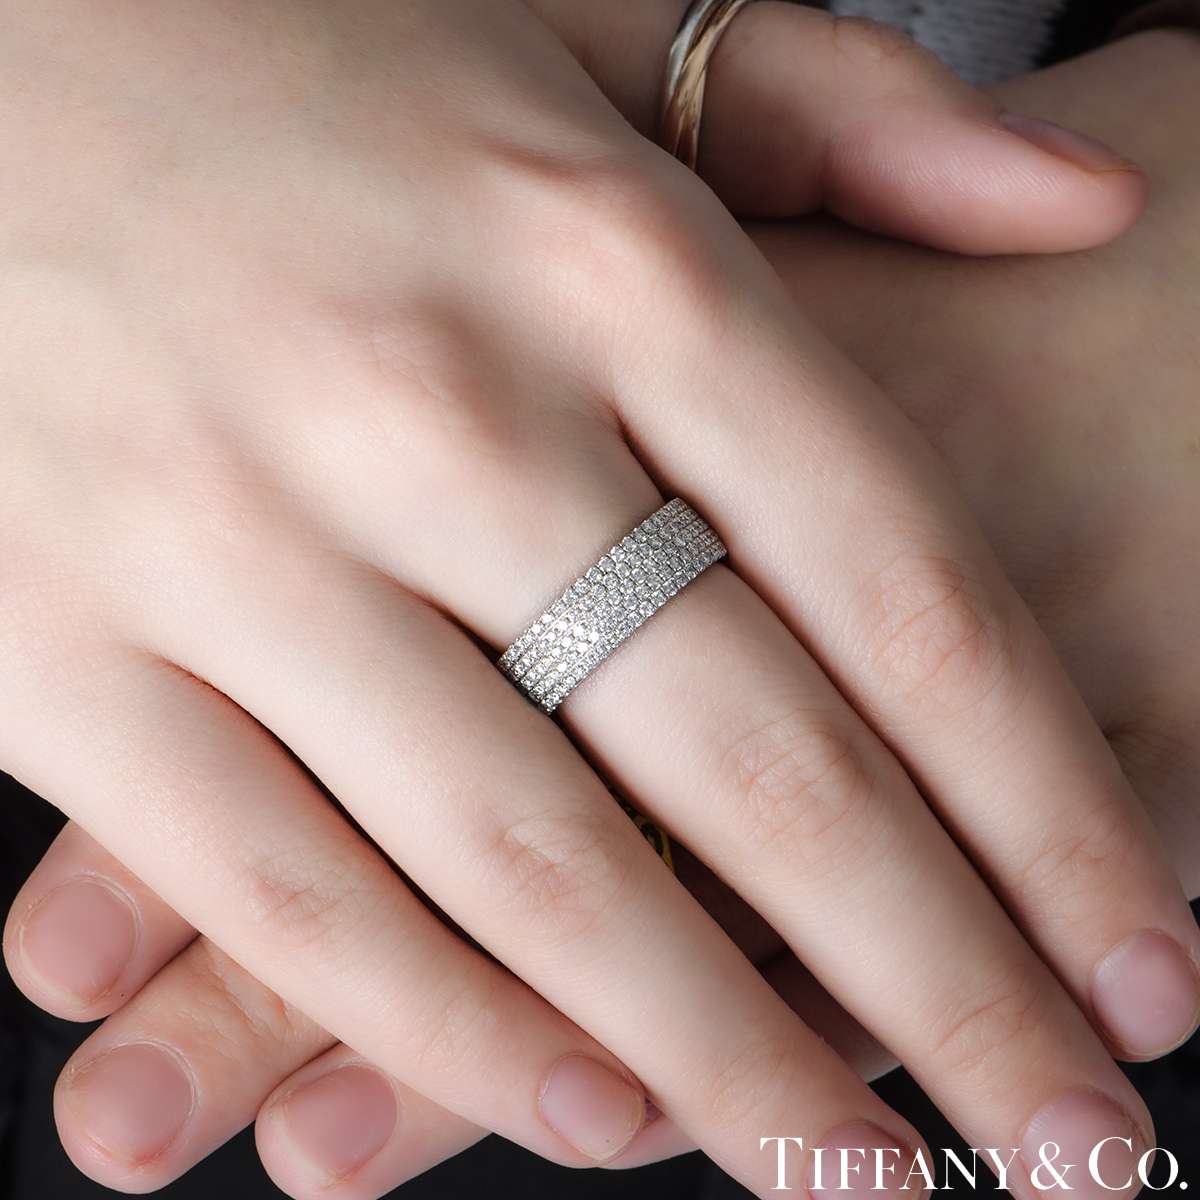 Tiffany & Co. White Gold Diamond Band Ring 0.76ct G/VS